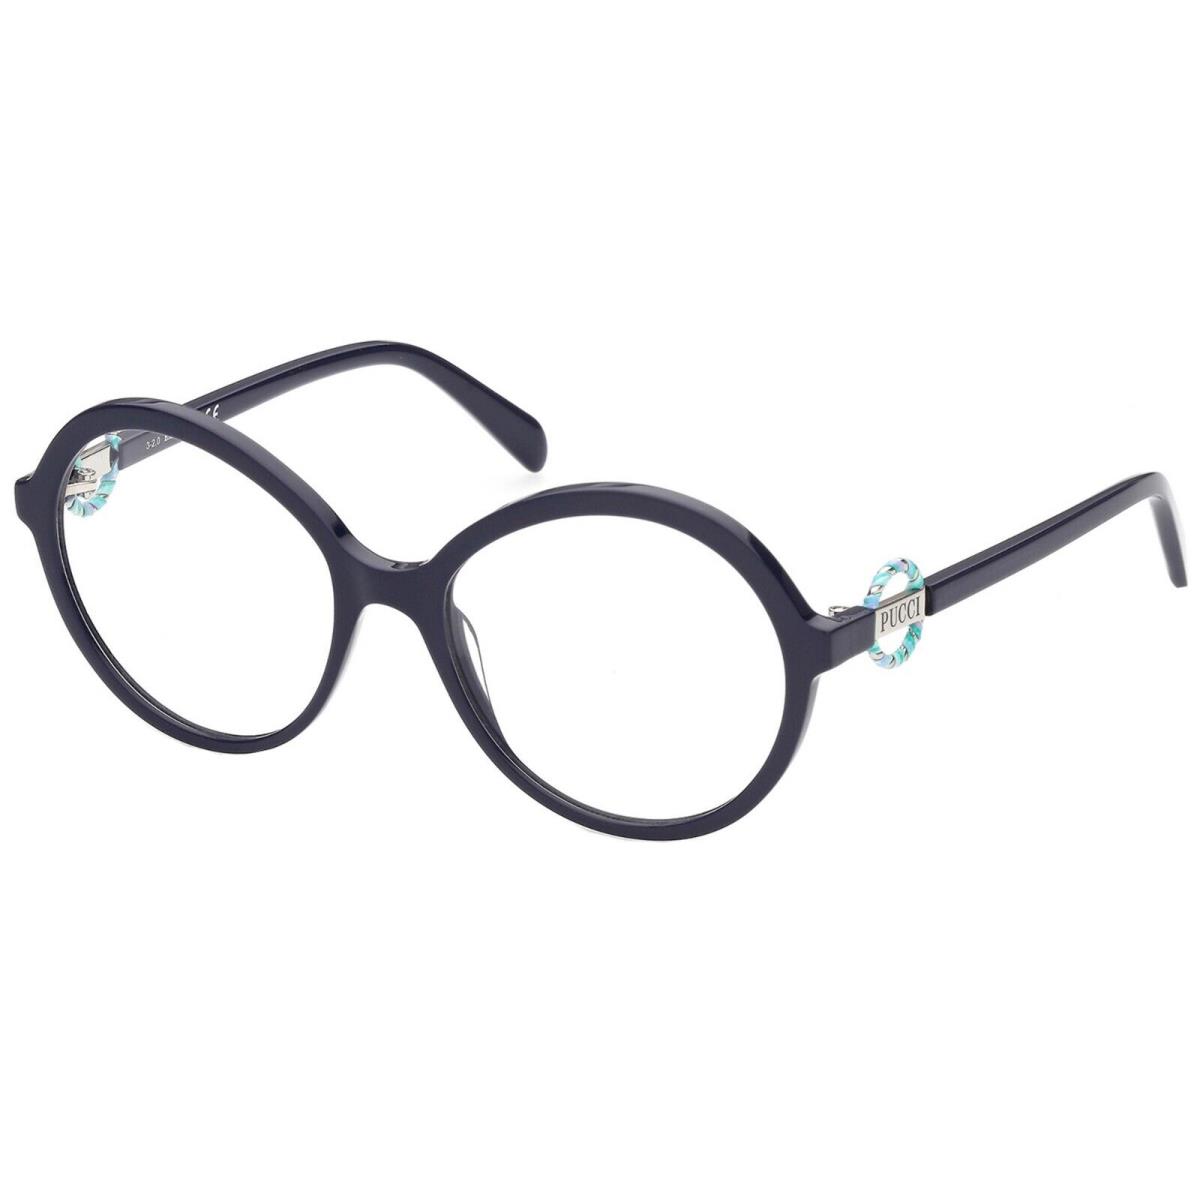 Emilio Pucci EP 5176 090 Blue Round Plastic Eyeglasses Frame 54-17-140 5176 RX